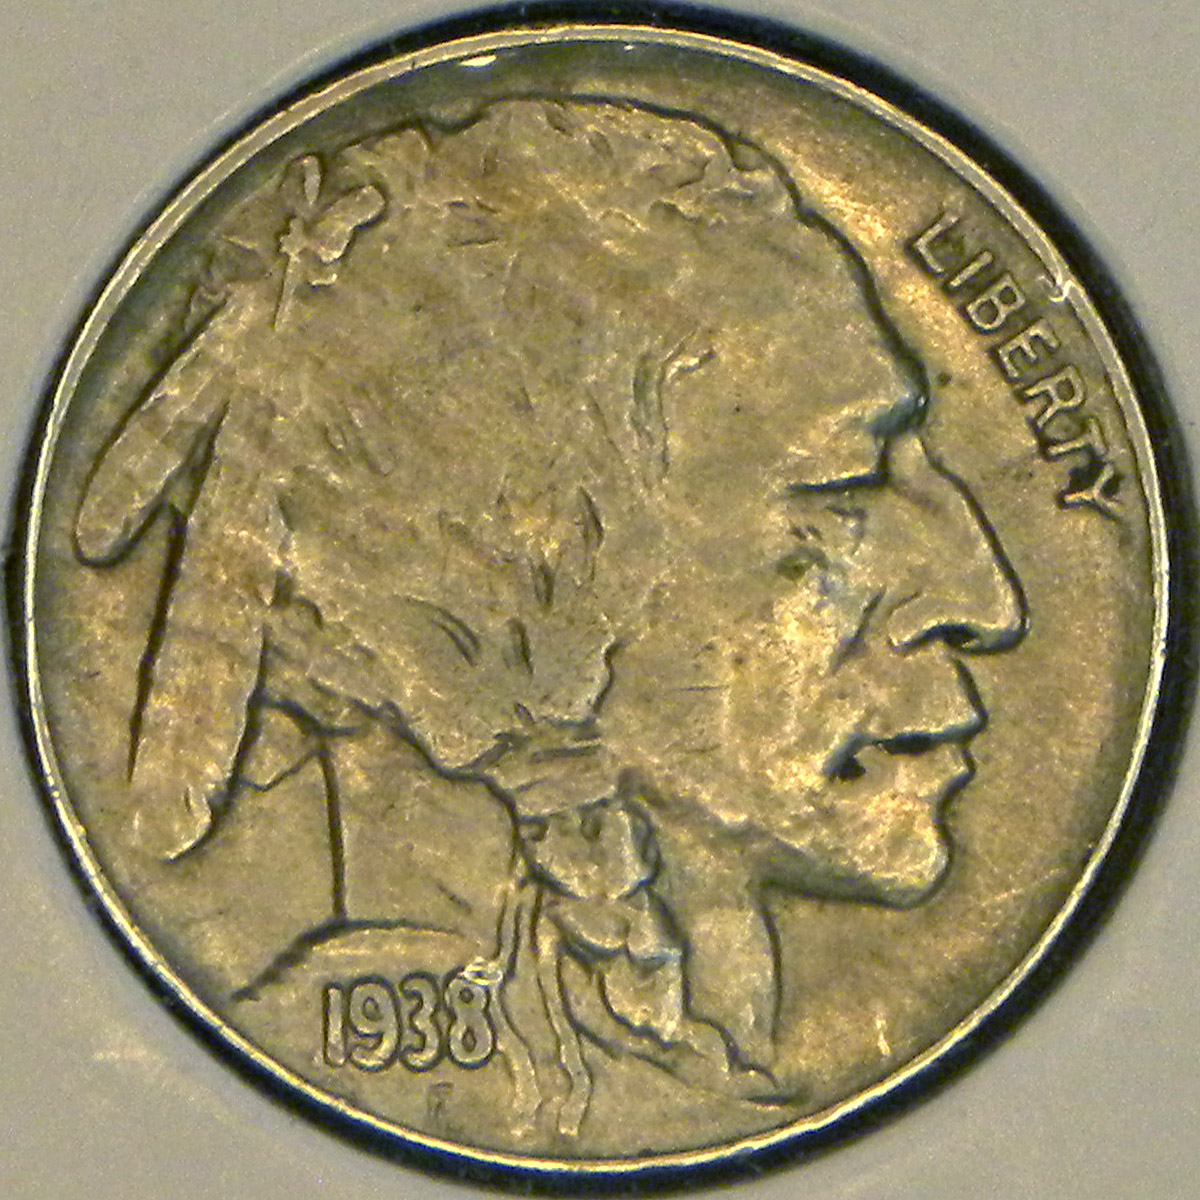 1938-D Buffalo Nickel (obverse)